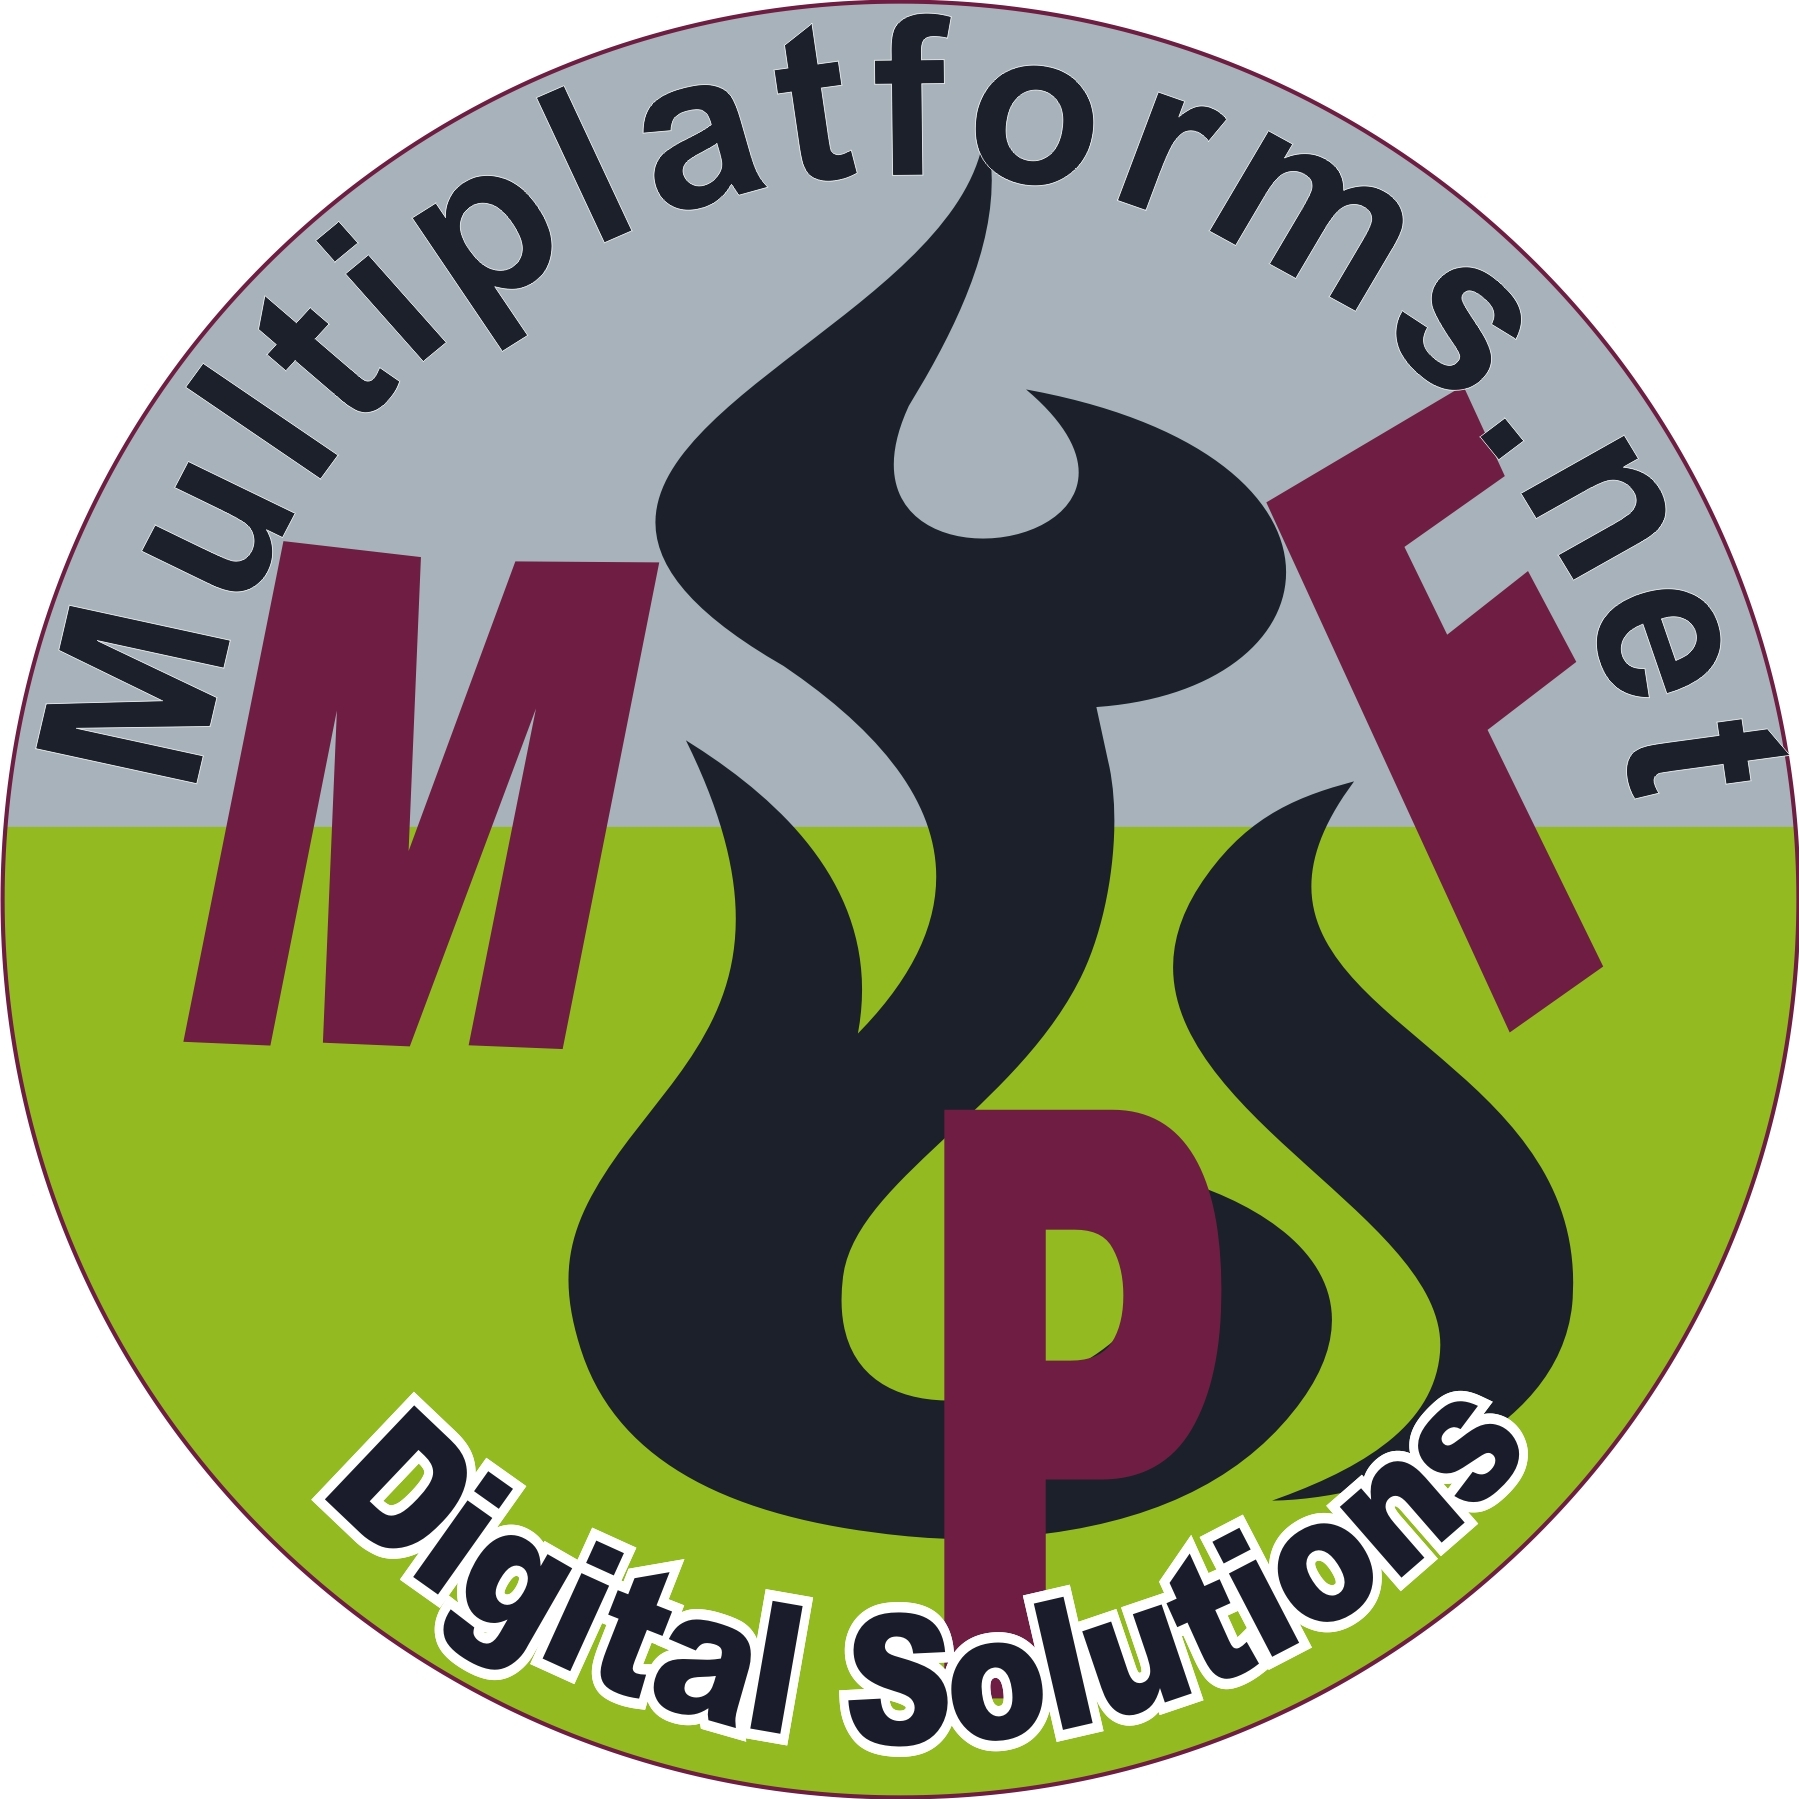 Multiplatform Digital Information Technology LTD